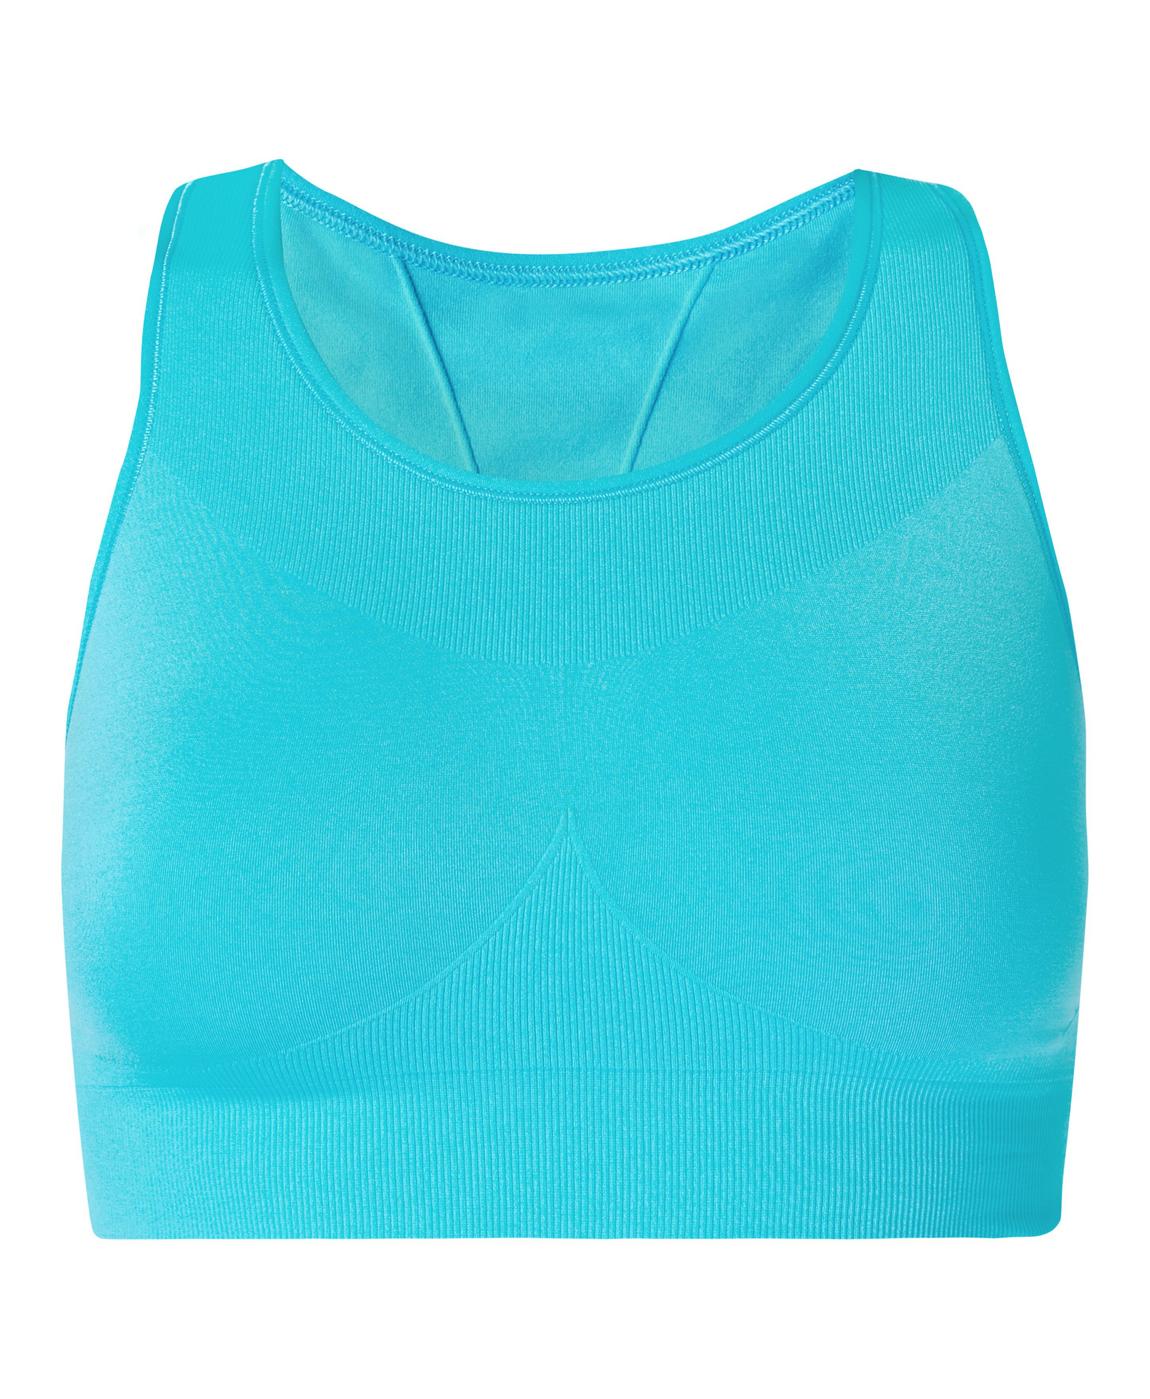 Stamina Sports Bra - Seaglass Blue, Women's Sports Bras